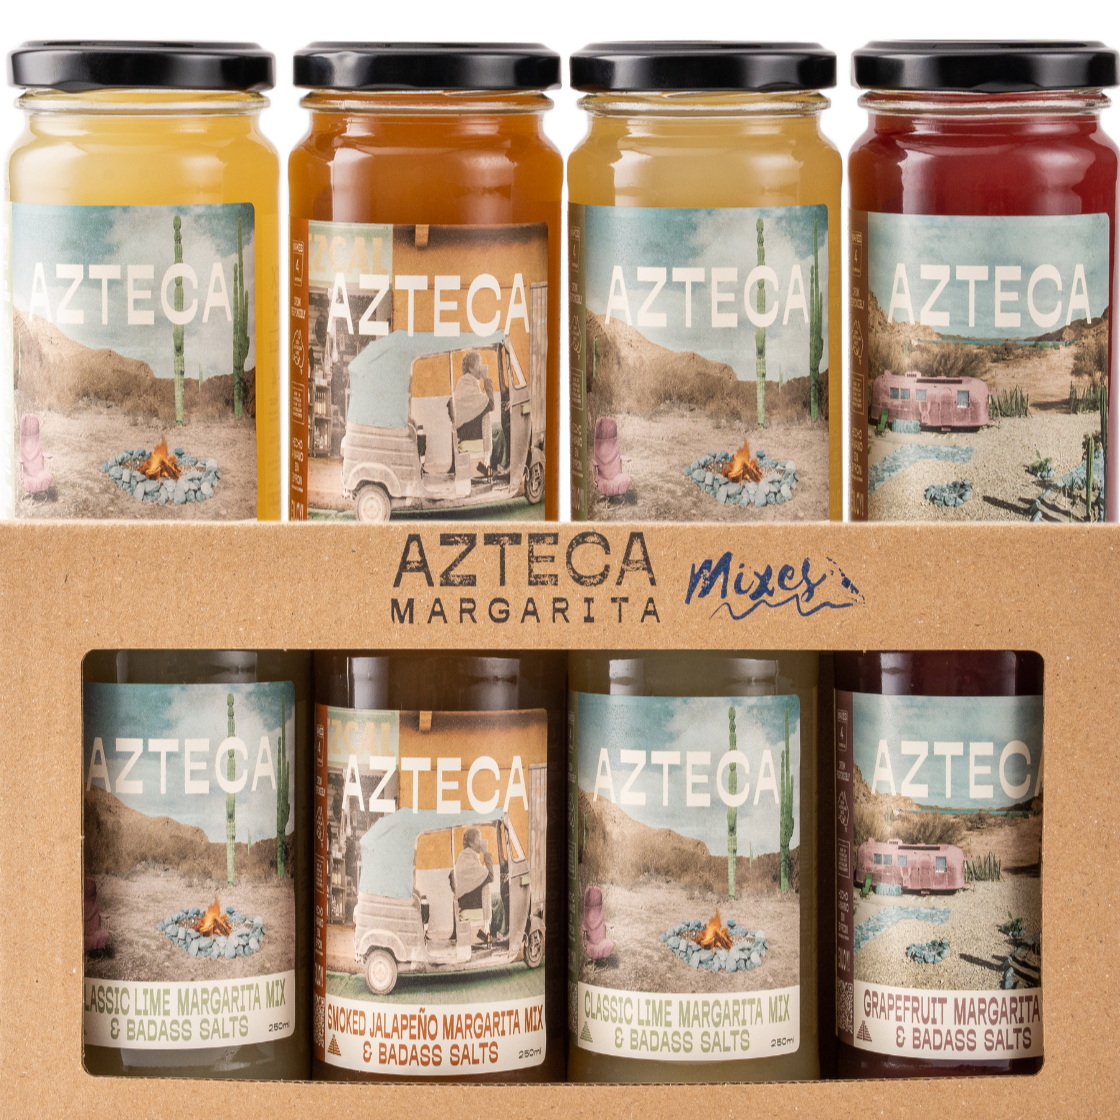 AZTECA Margarita Gift Pack [4 Pack]